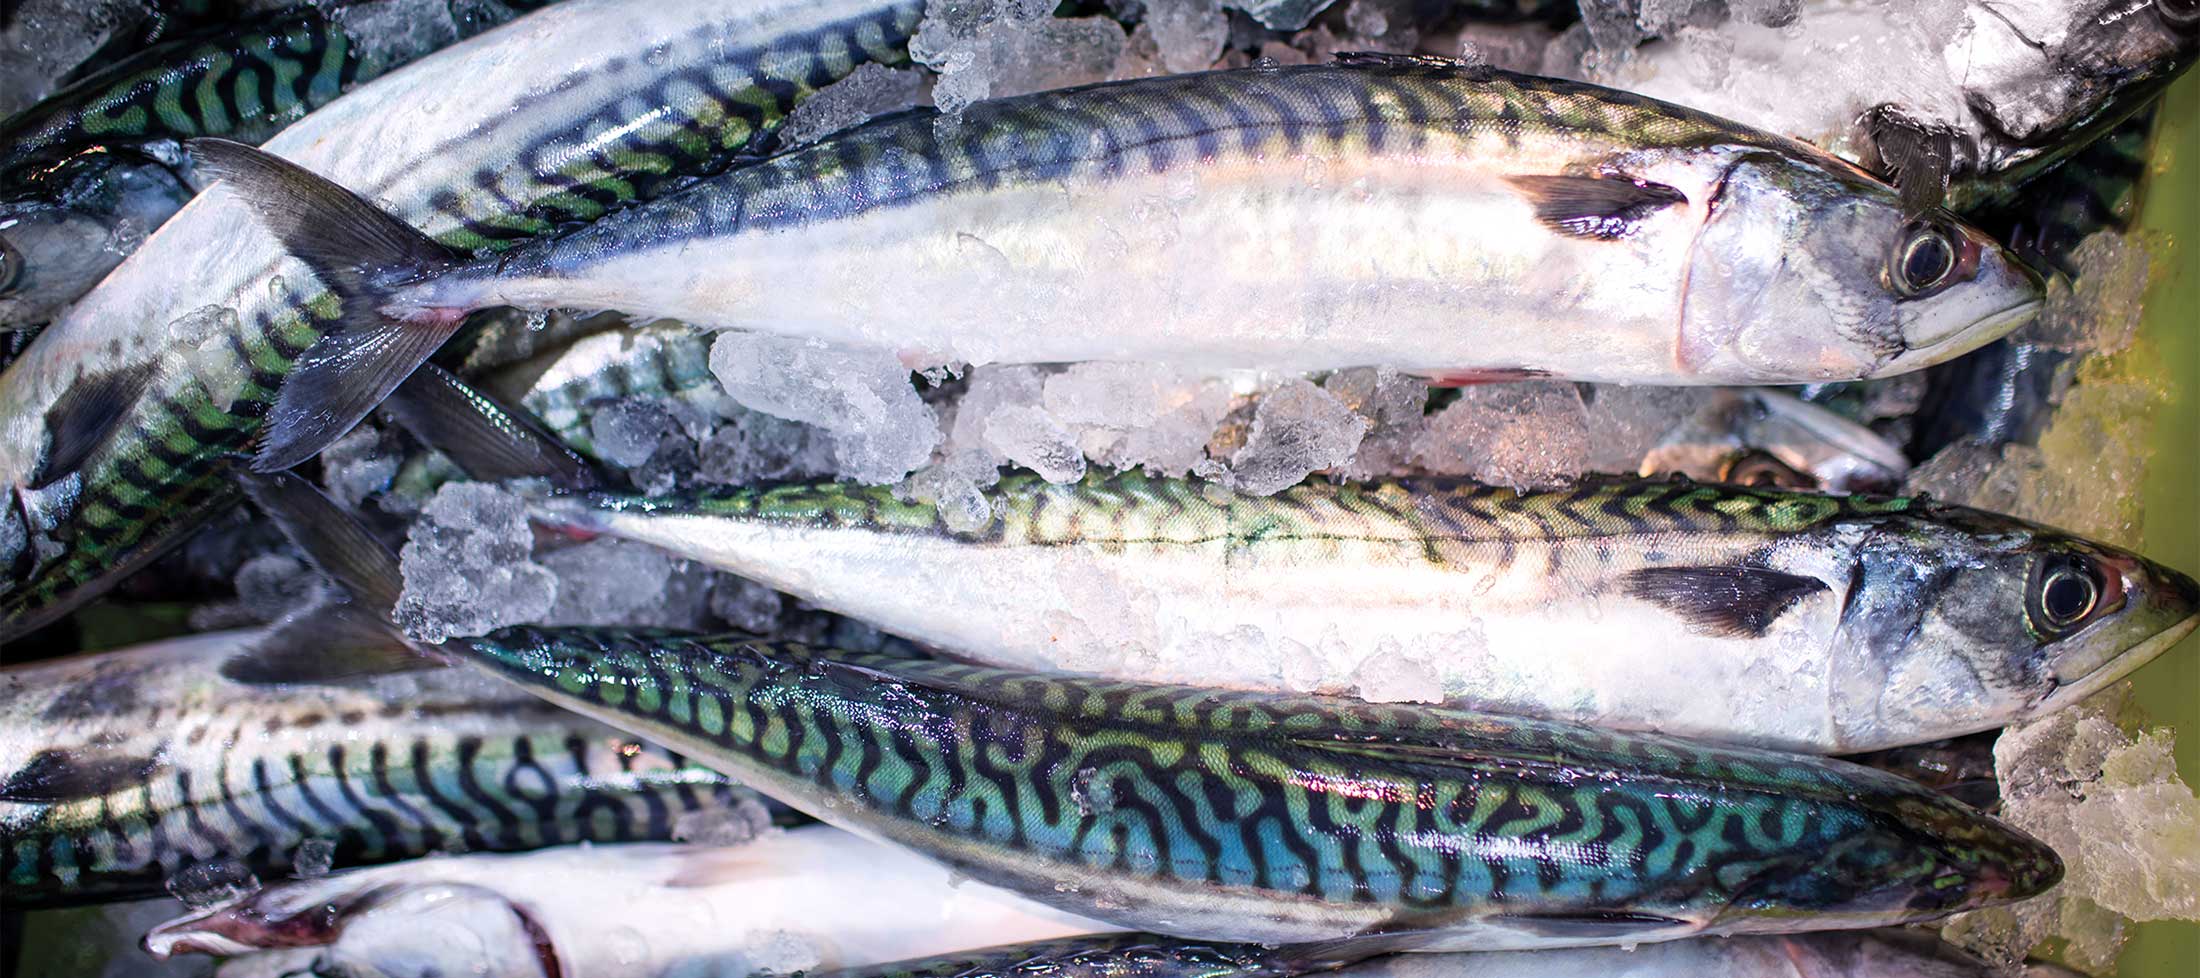 The market’s Atlantic mackerel are fresh off the local boats.